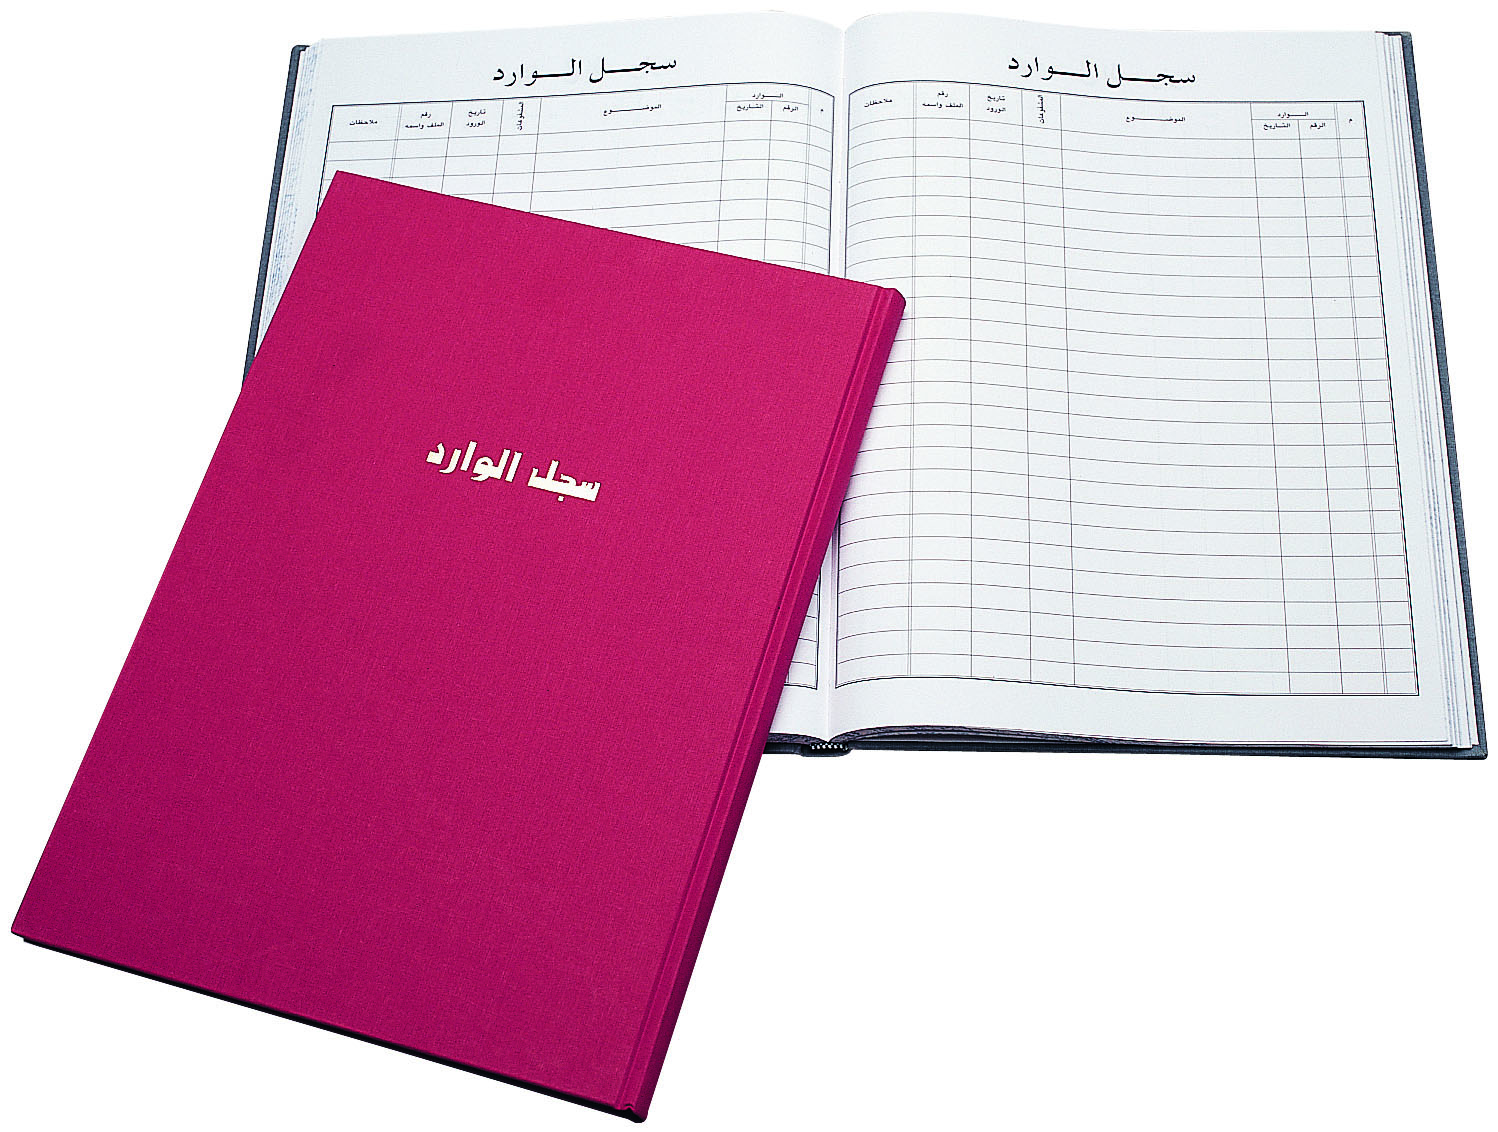 Incoming register 96 sheets(arabic) (Sejel Al Wared)